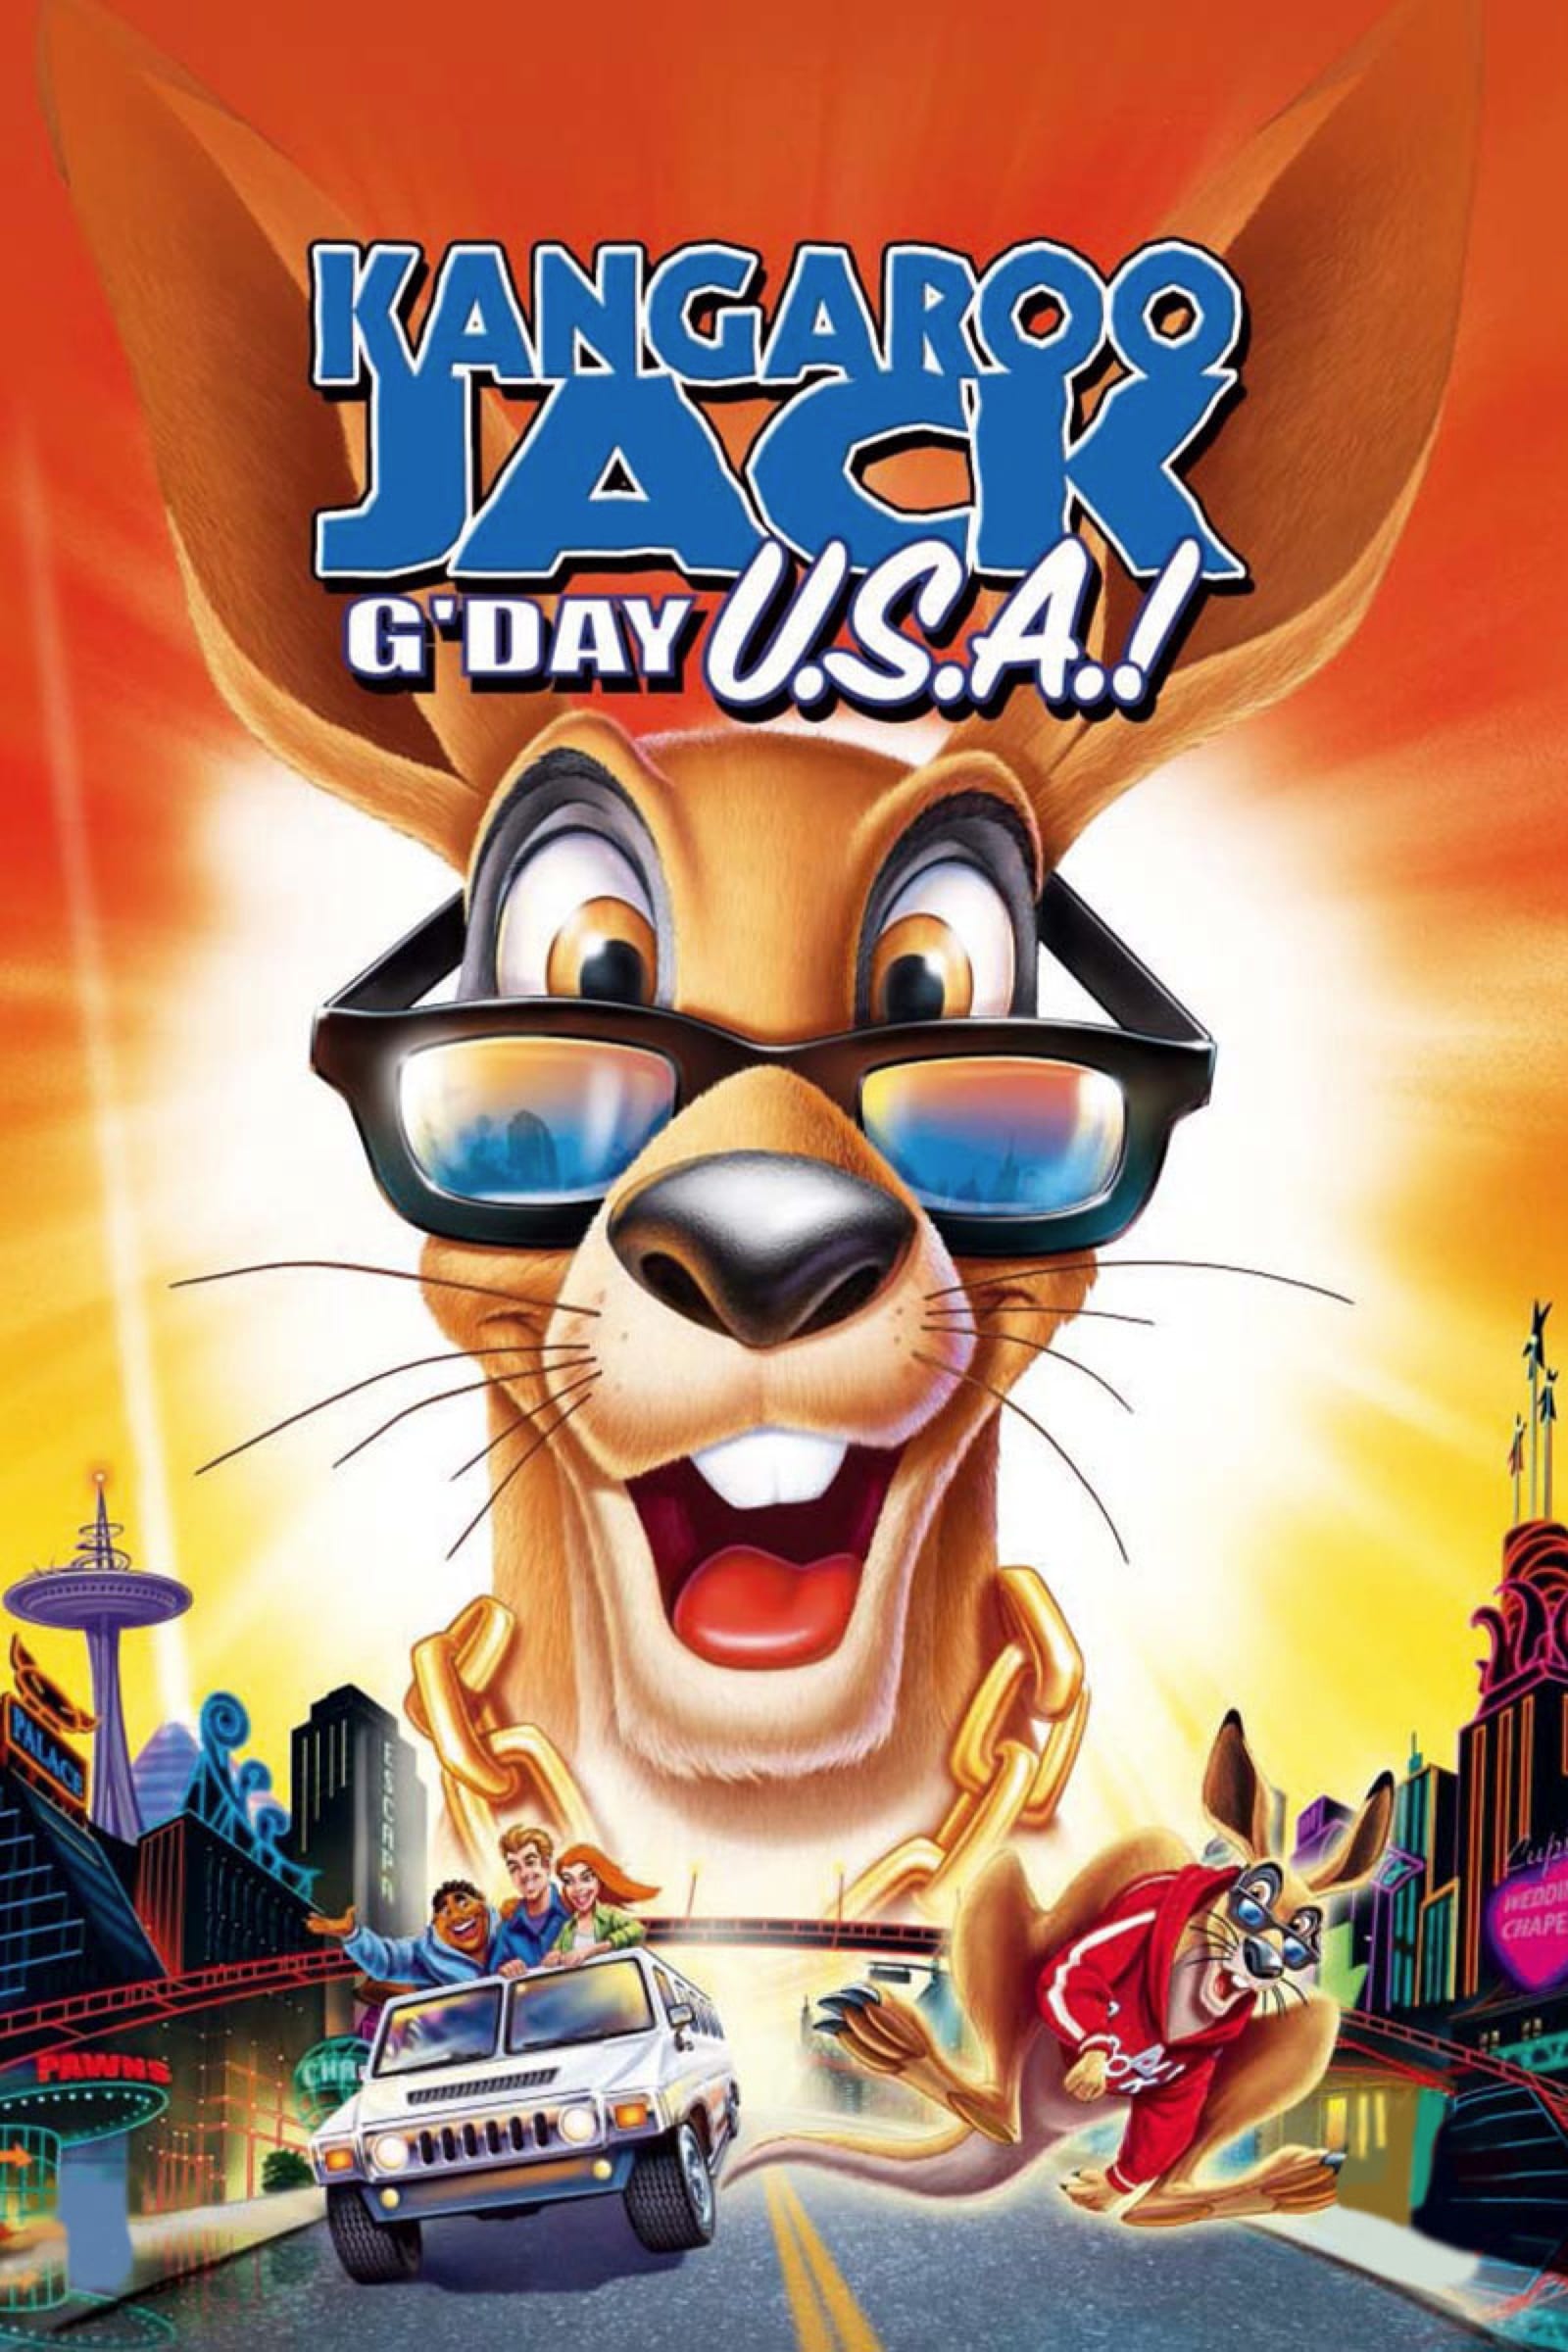 Kangaroo Jack: G'Day, U.S.A.! - 123movies | Watch Online Full Movies TV